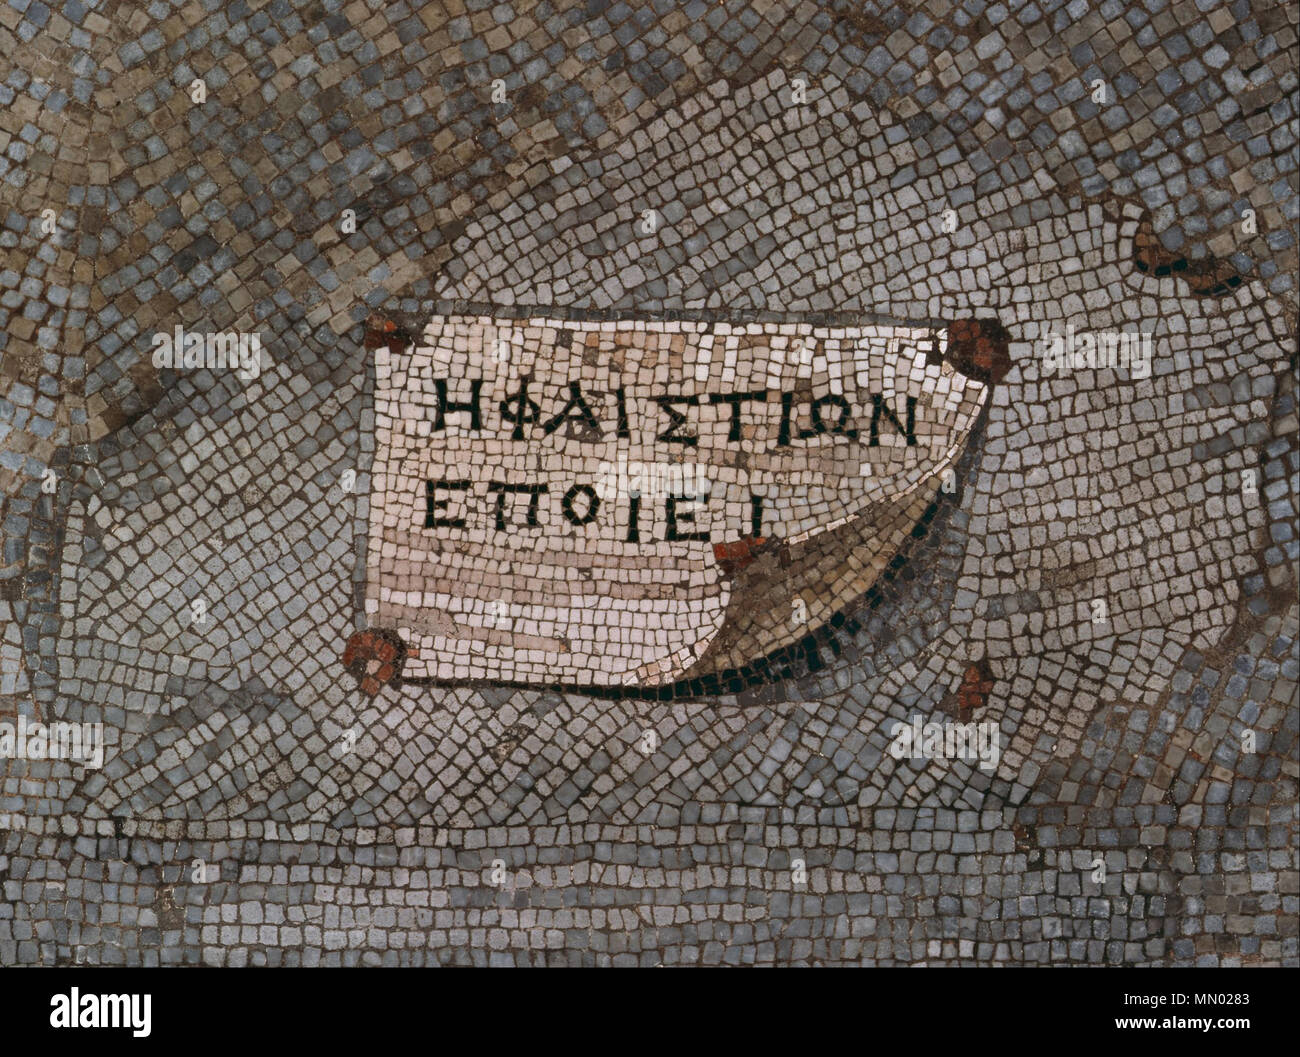 Hephaestion mosaic. Early to mid-2nd century BCE. Hephaestion mosaic - Google Art Project Stock Photo